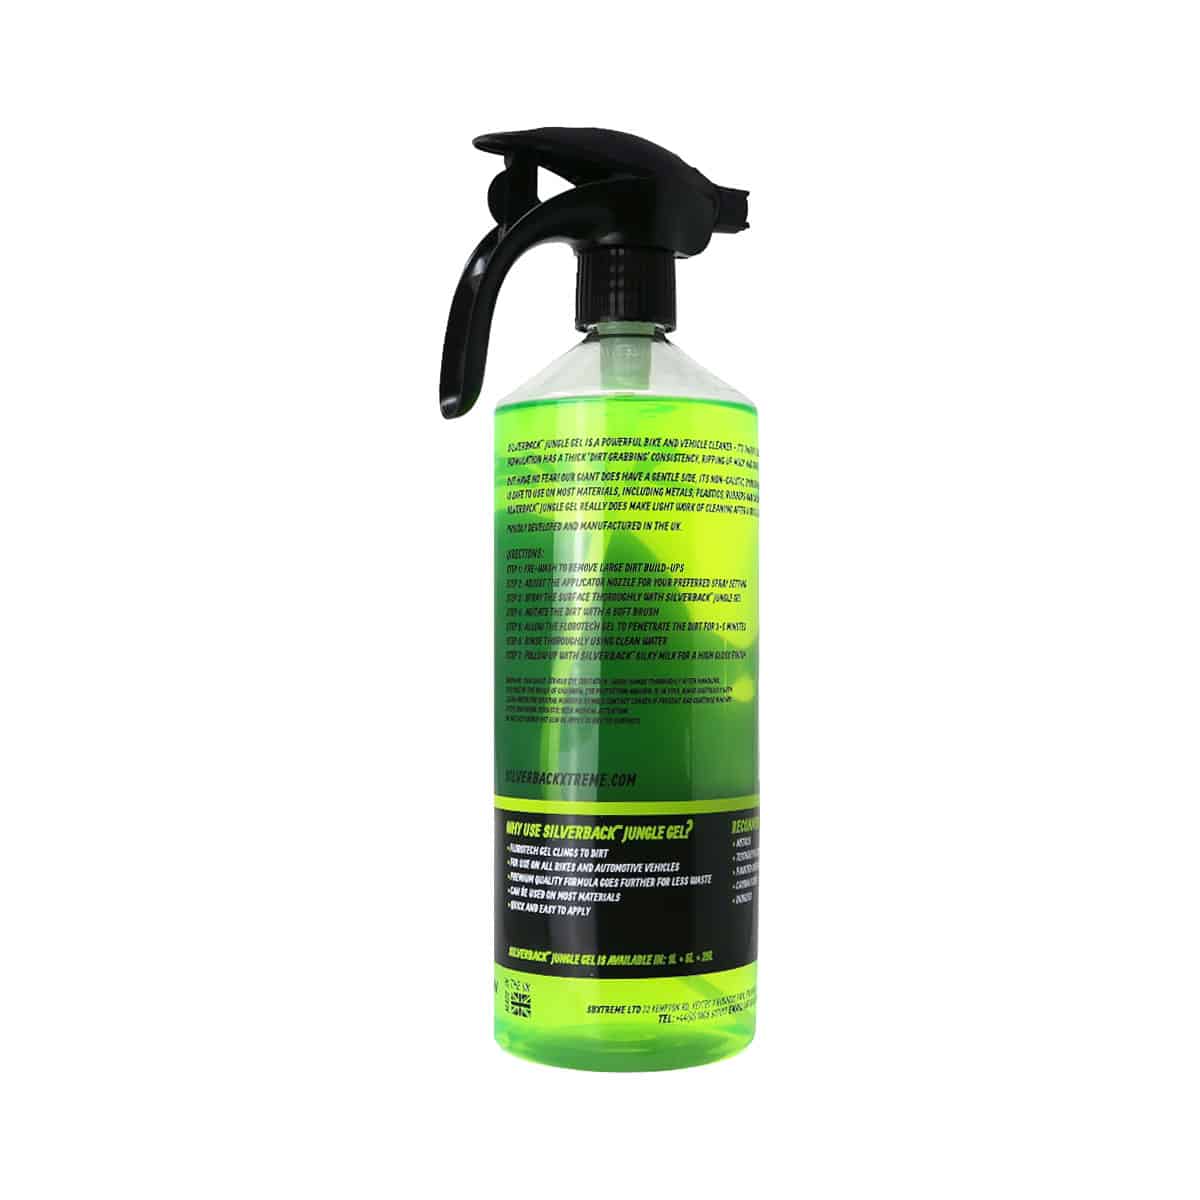 Silverback Jungle Gel: Shift stubborn paintwork & plastics contamination with one spray instructions